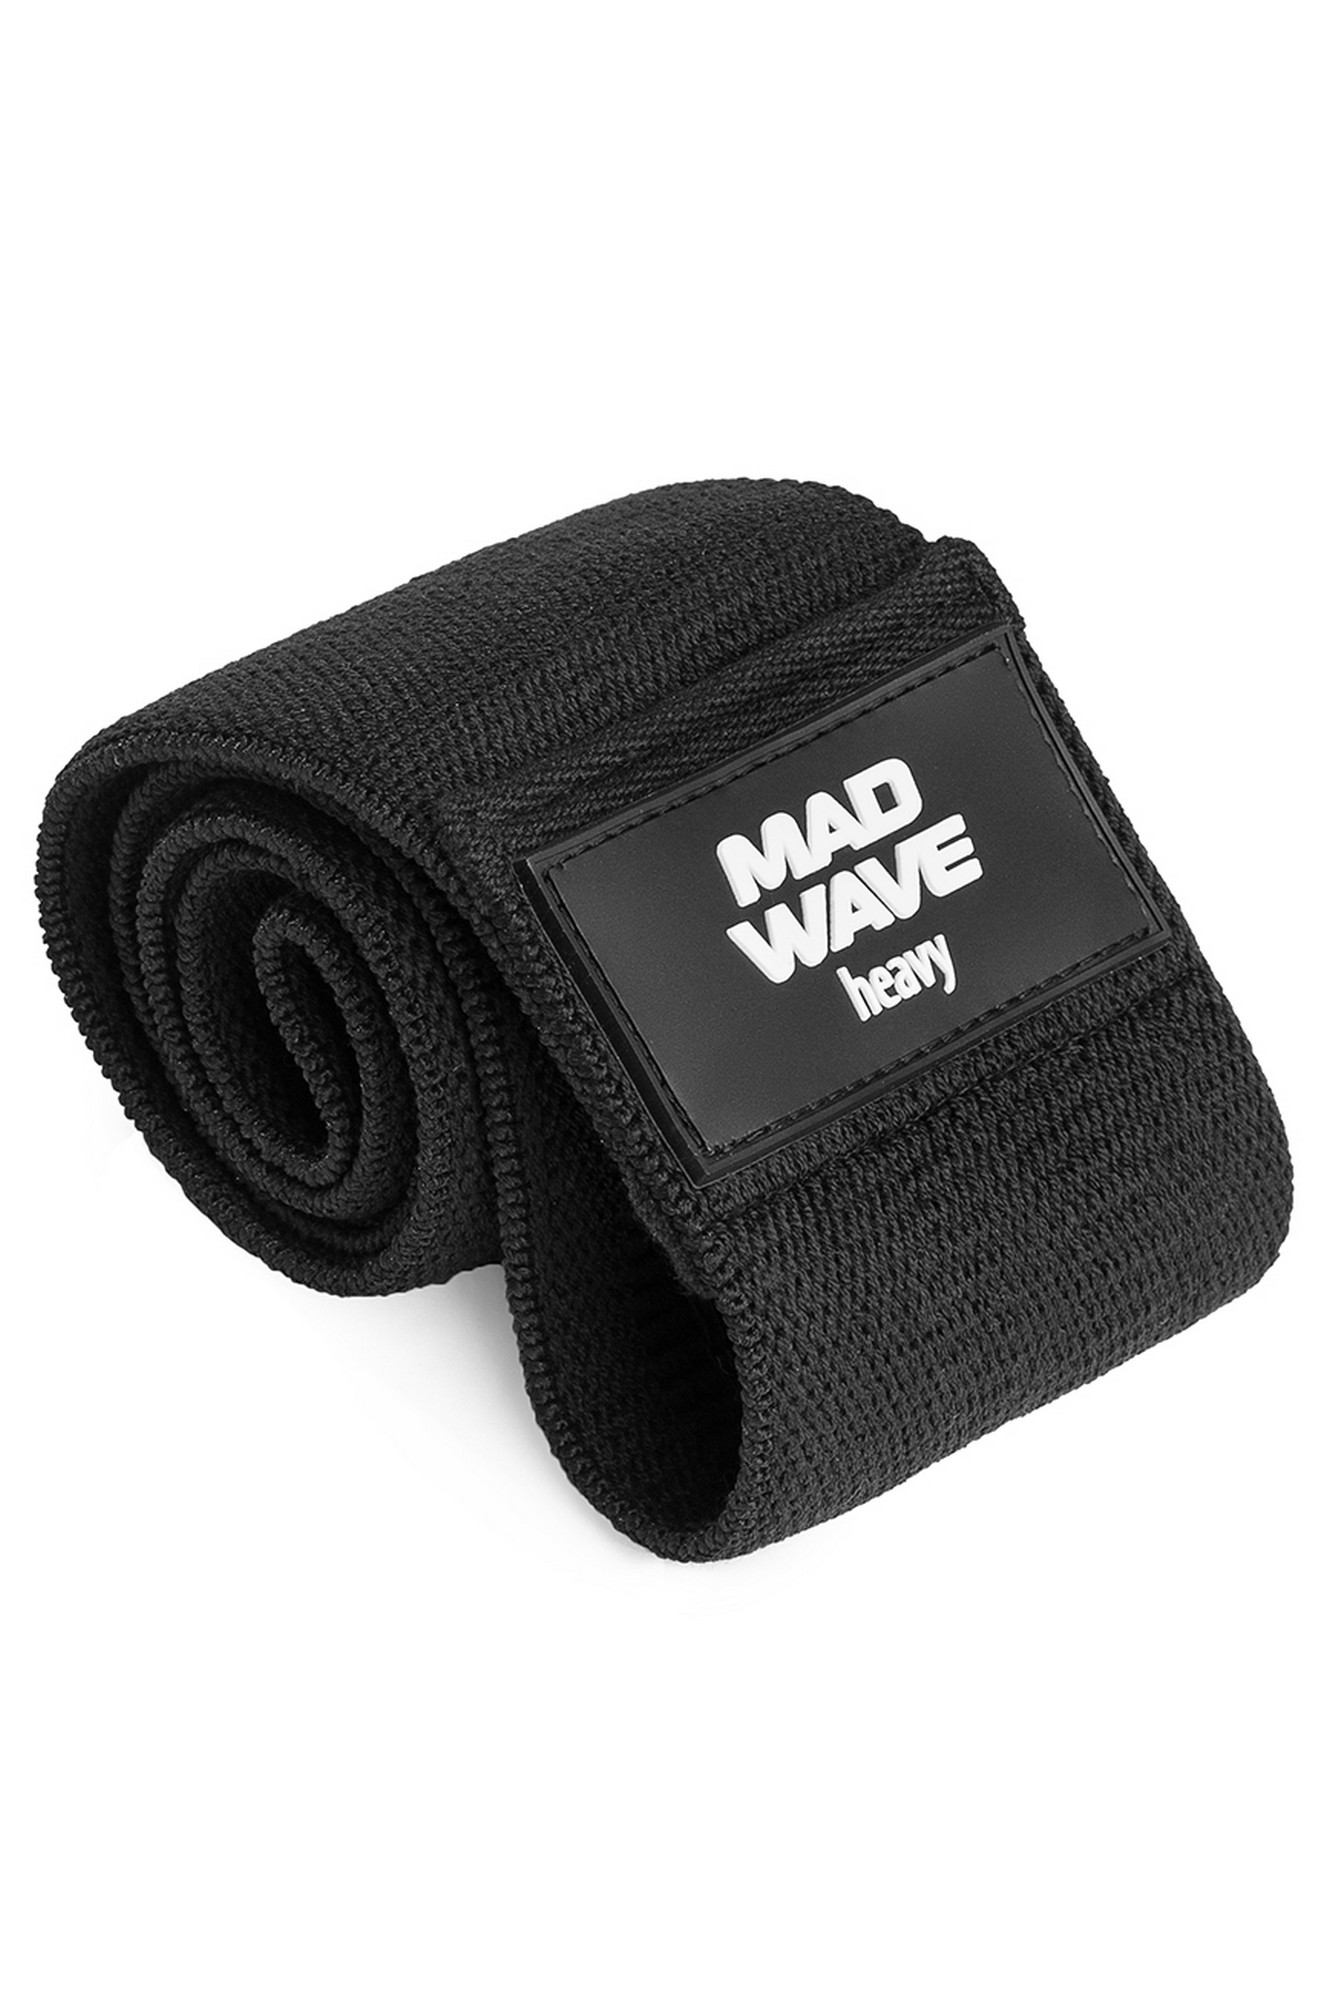 Эспандер Mad Wave Textile Hip Band M1330 02 3 00W 1333_2000